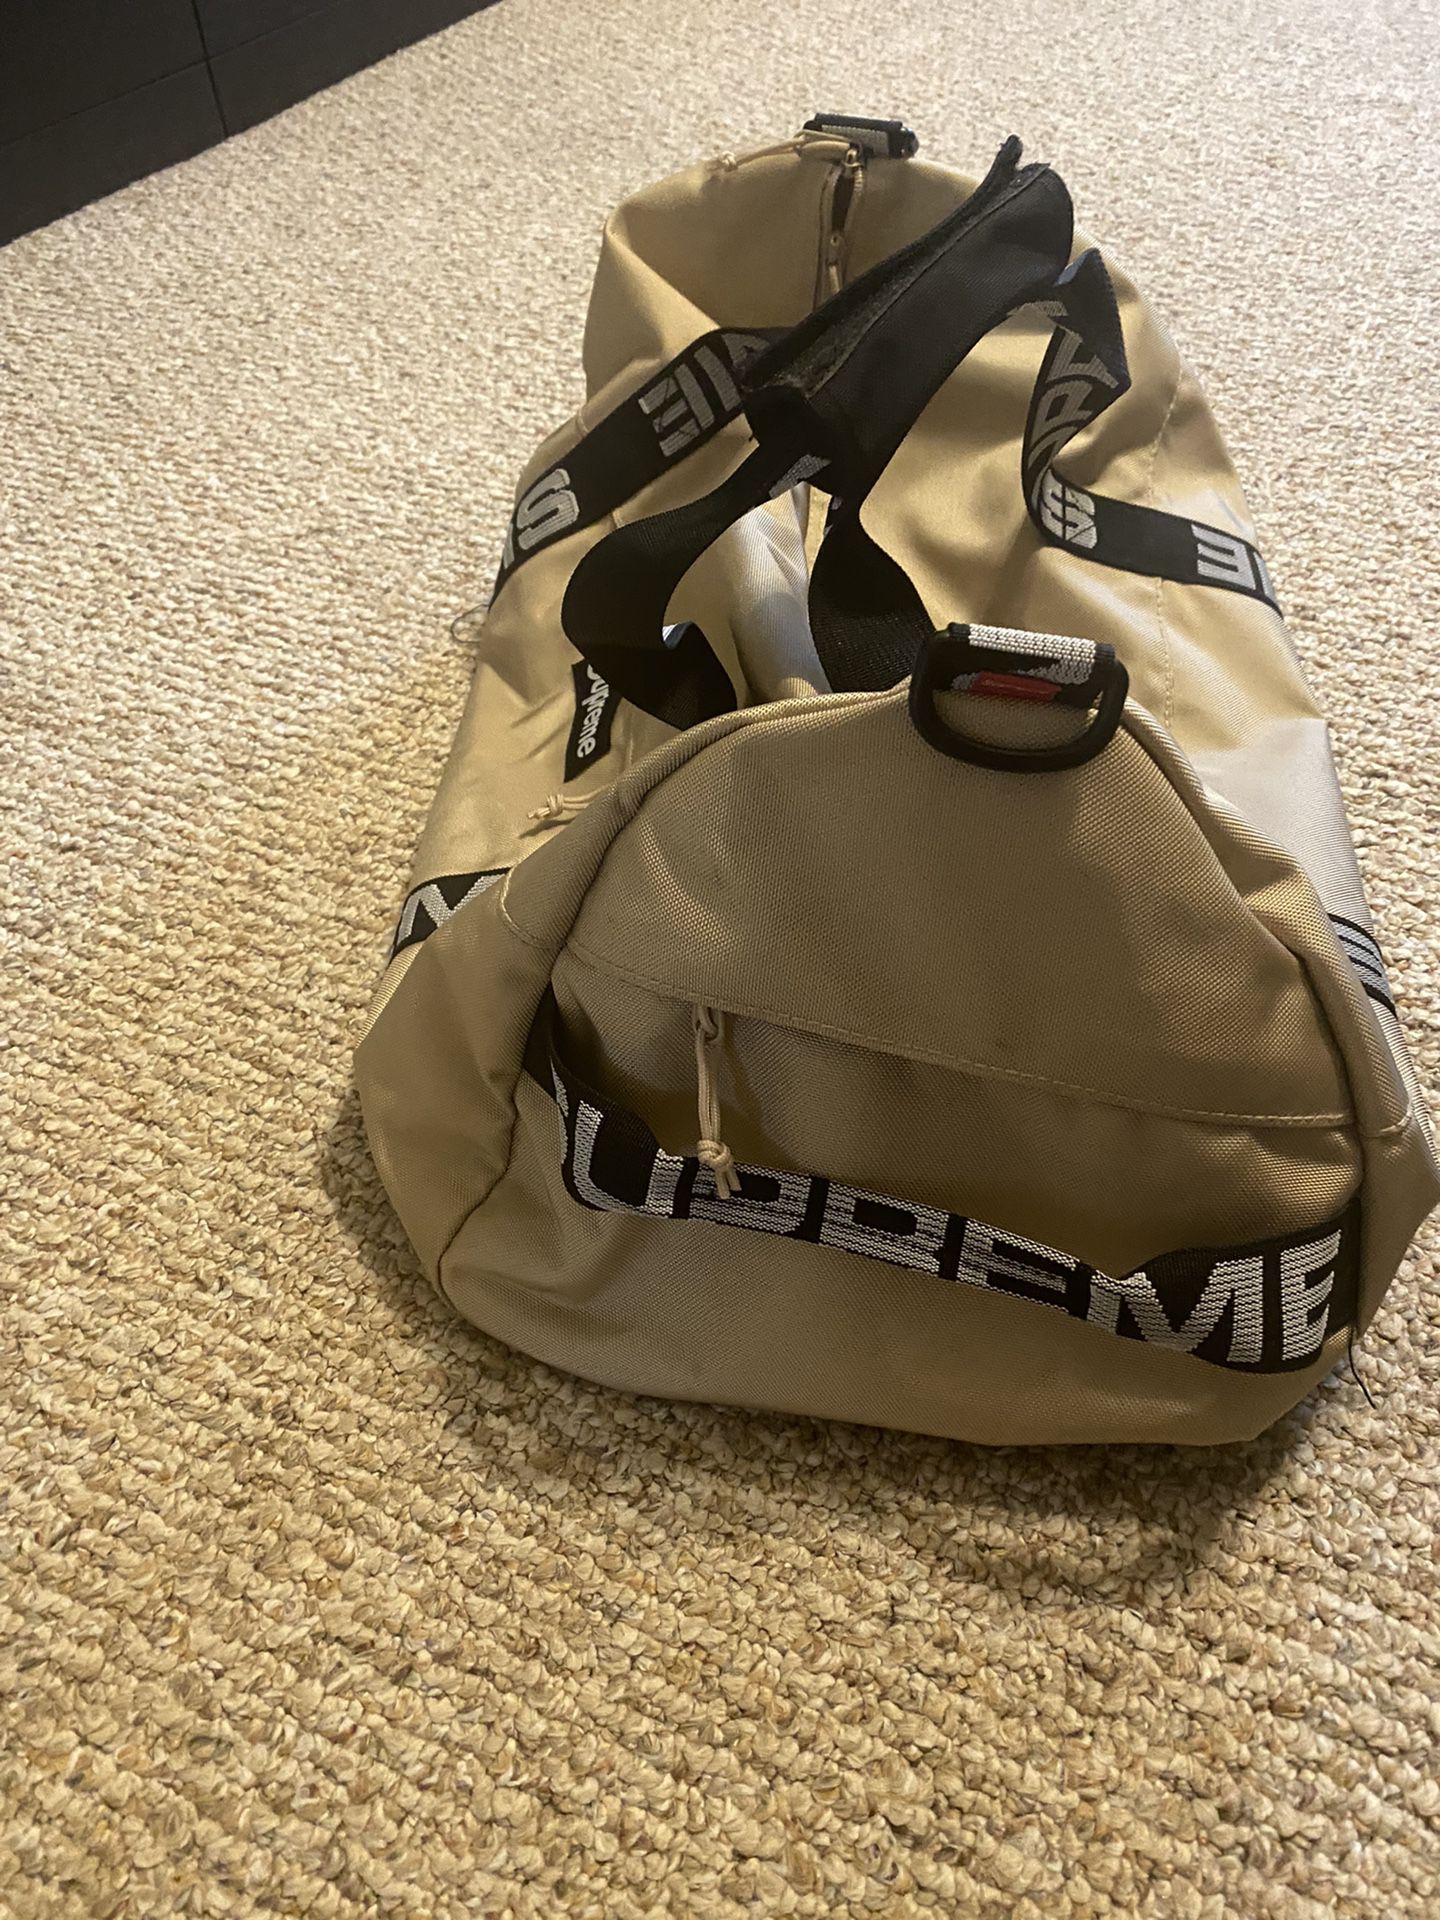 Supreme SS18 Tan Duffle Bag 🏆 Trusted Seller 🚚 Fast - Depop